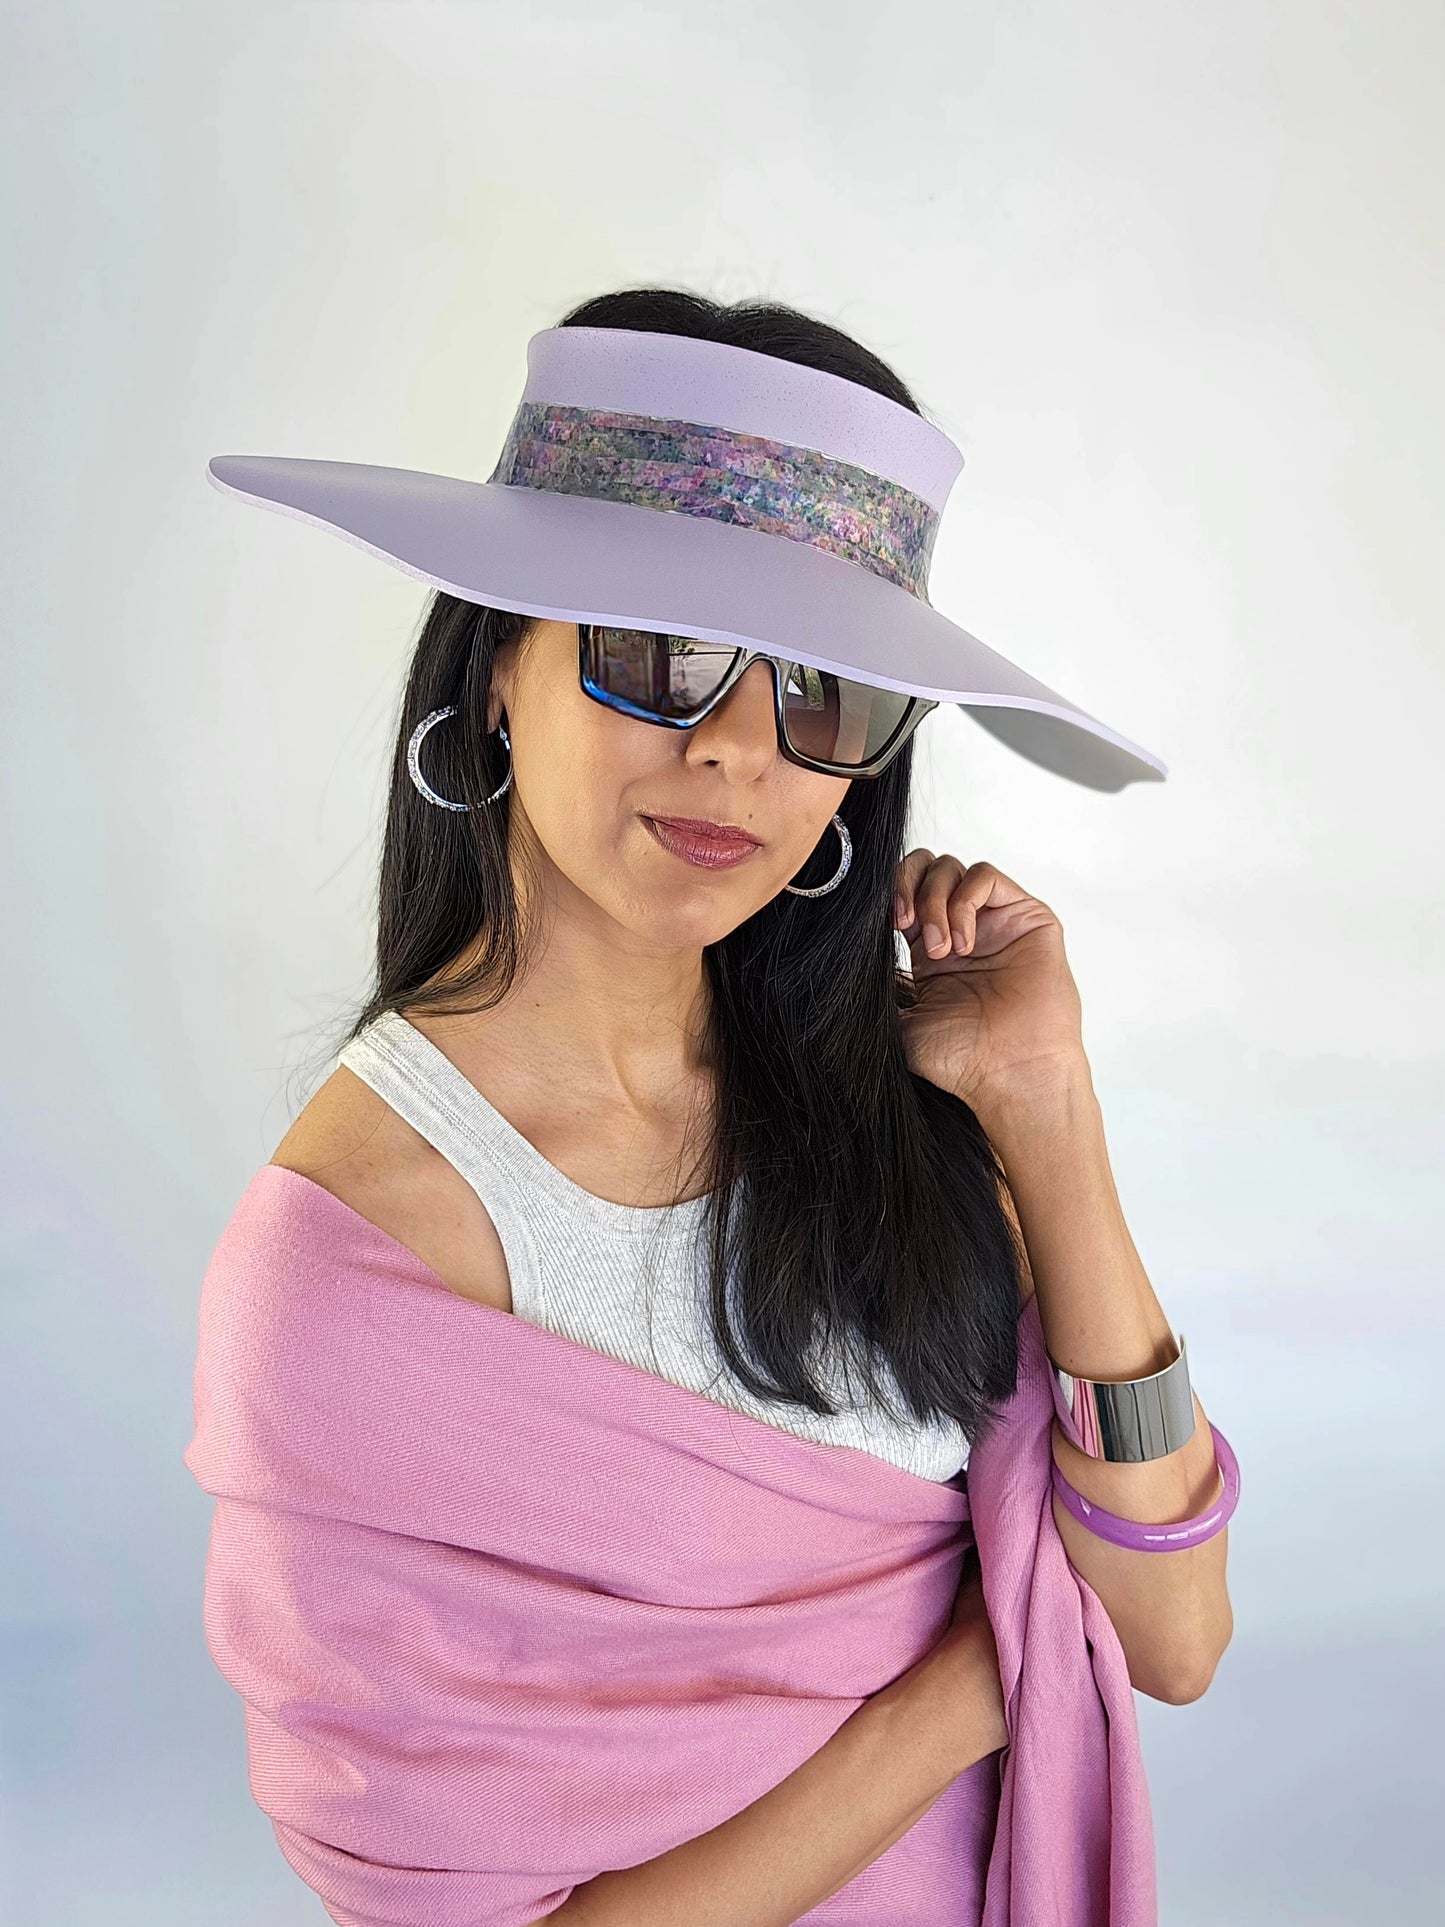 Lilac Purple Lotus Sun Visor Hat with Elegant Monet Style Floral Band and Silver Paint Splatter Effect: 1950s, Walks, Brunch, Asian, Golf, Summer, Church, No Headache, Pool, Beach